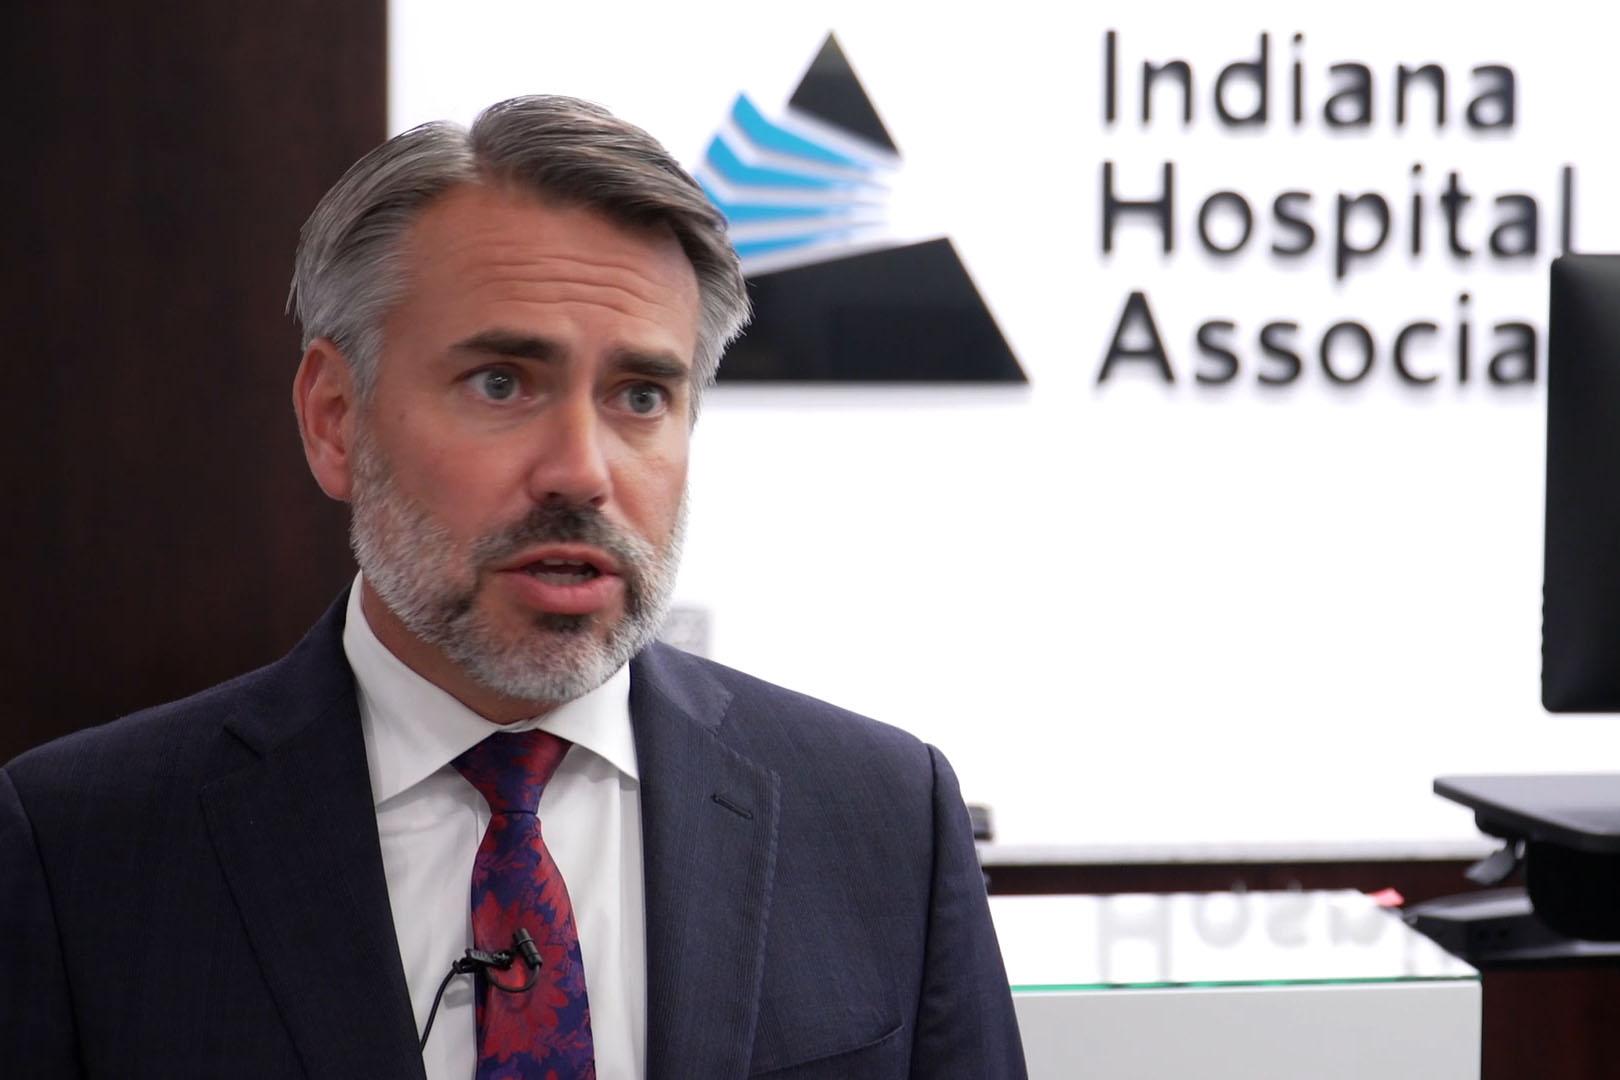 Brian Tabor, president of the Indiana Hospital Association